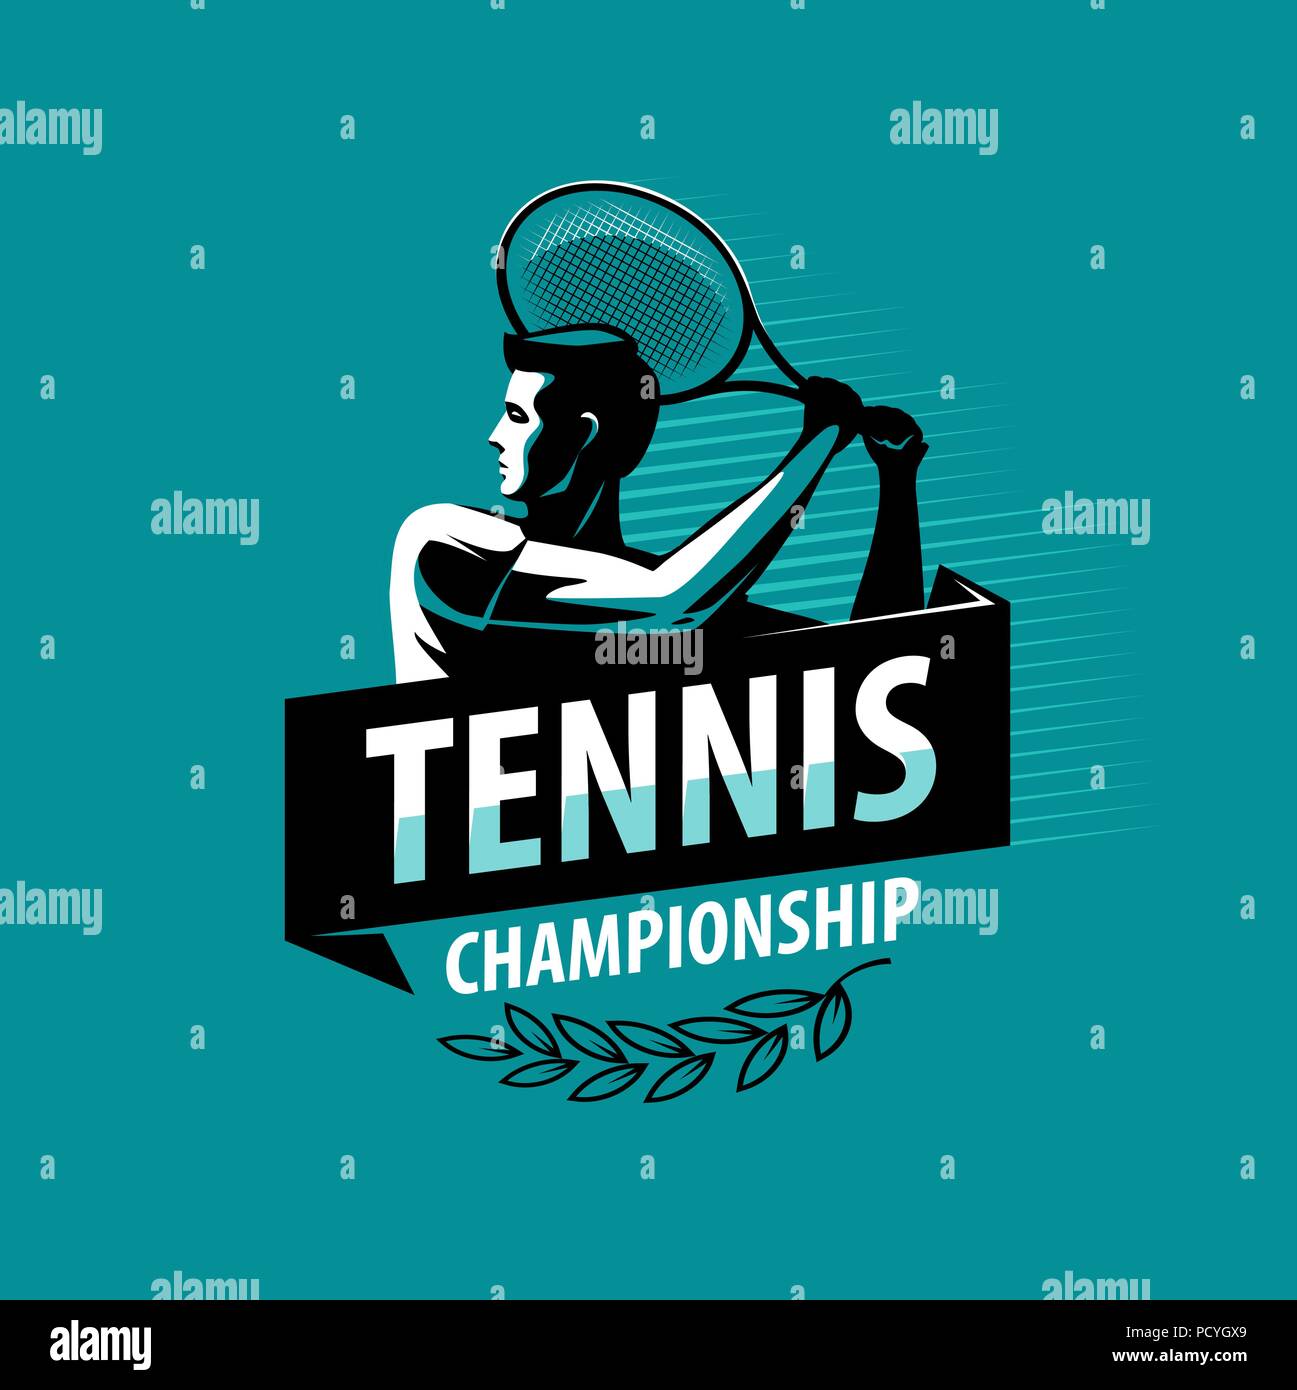 Tennis championship logo or label. Sport concept. Vector illustration Stock Vector